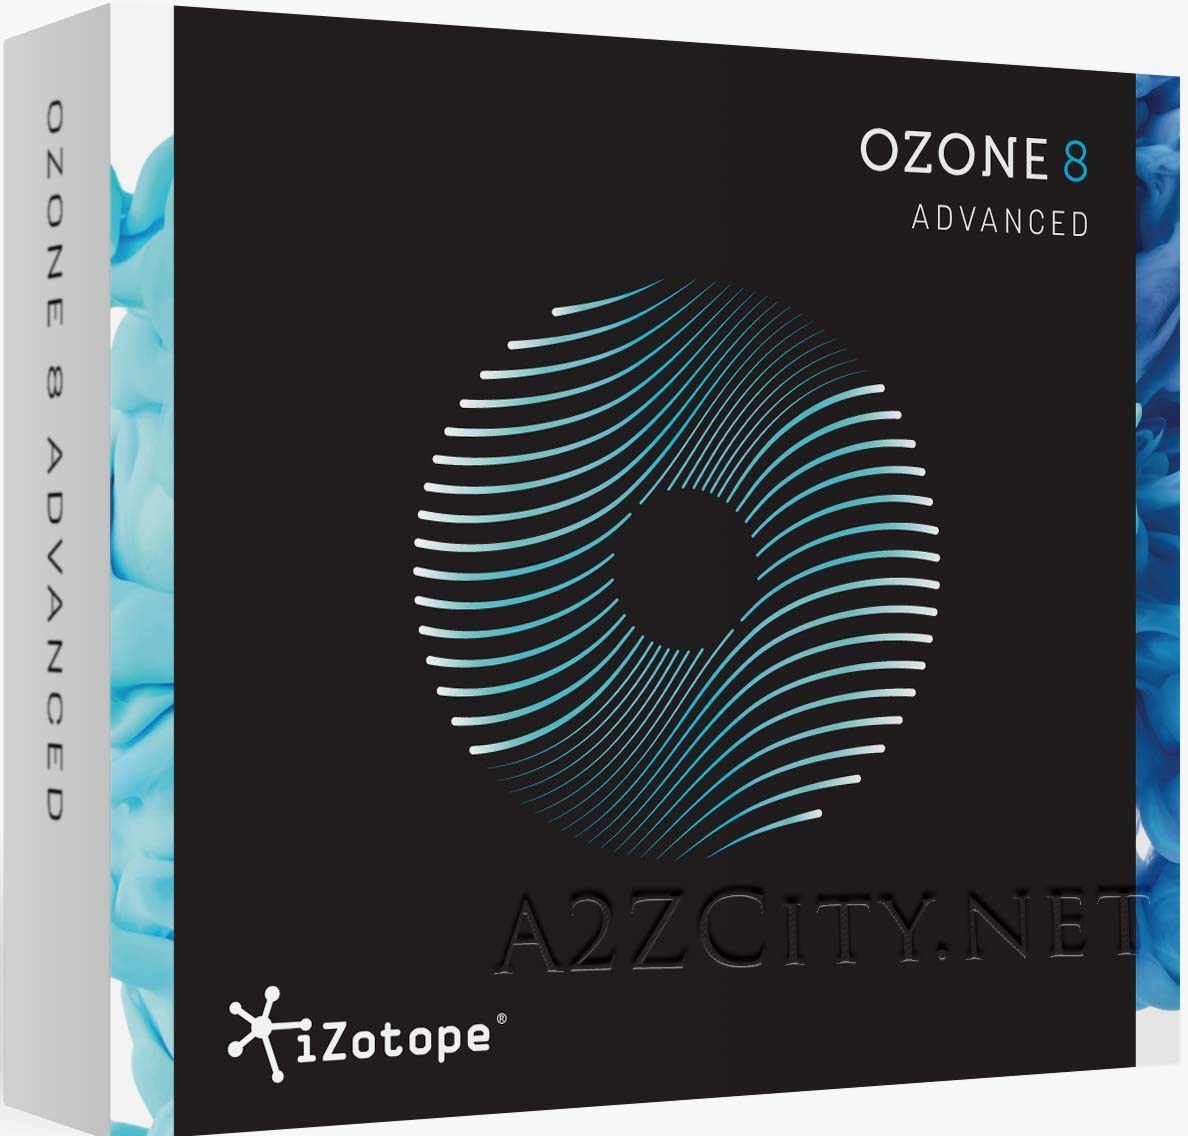 izotope ozone 5 crack free download